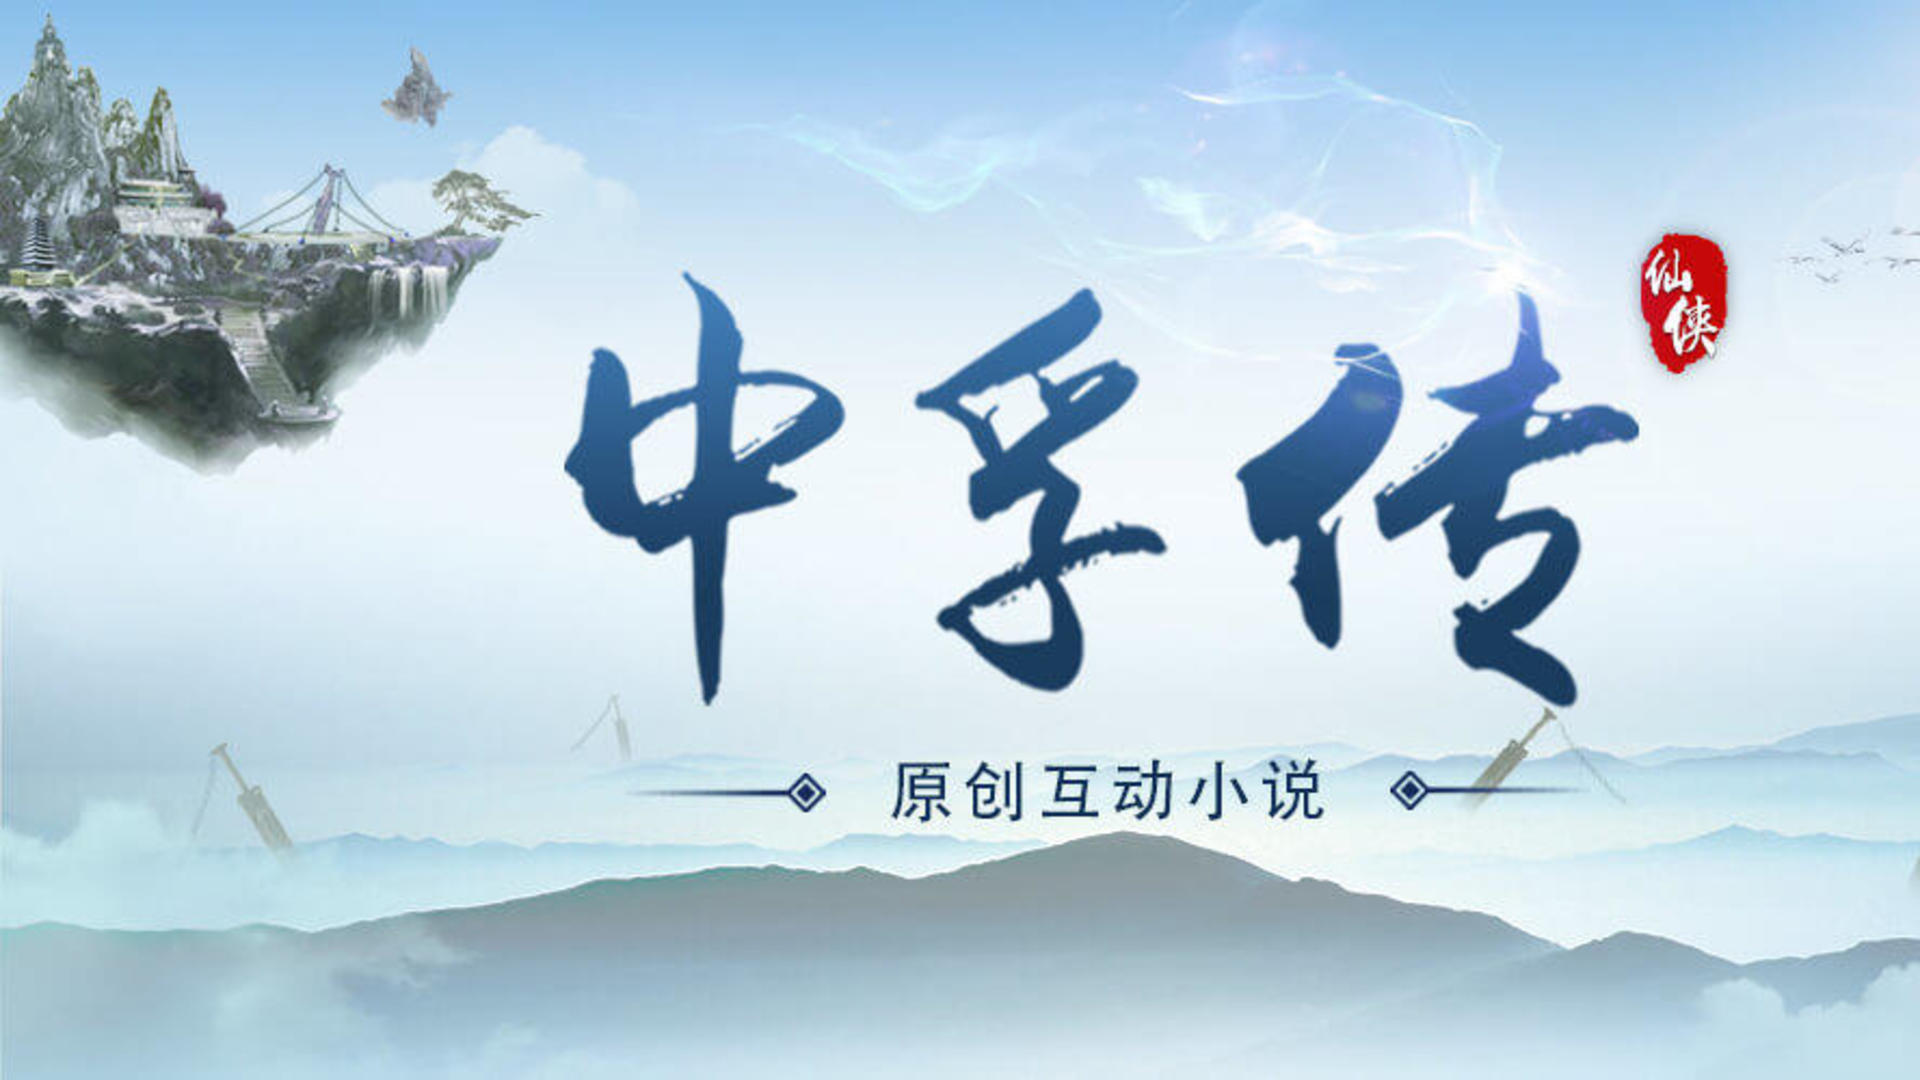 Banner of 中孚傳 